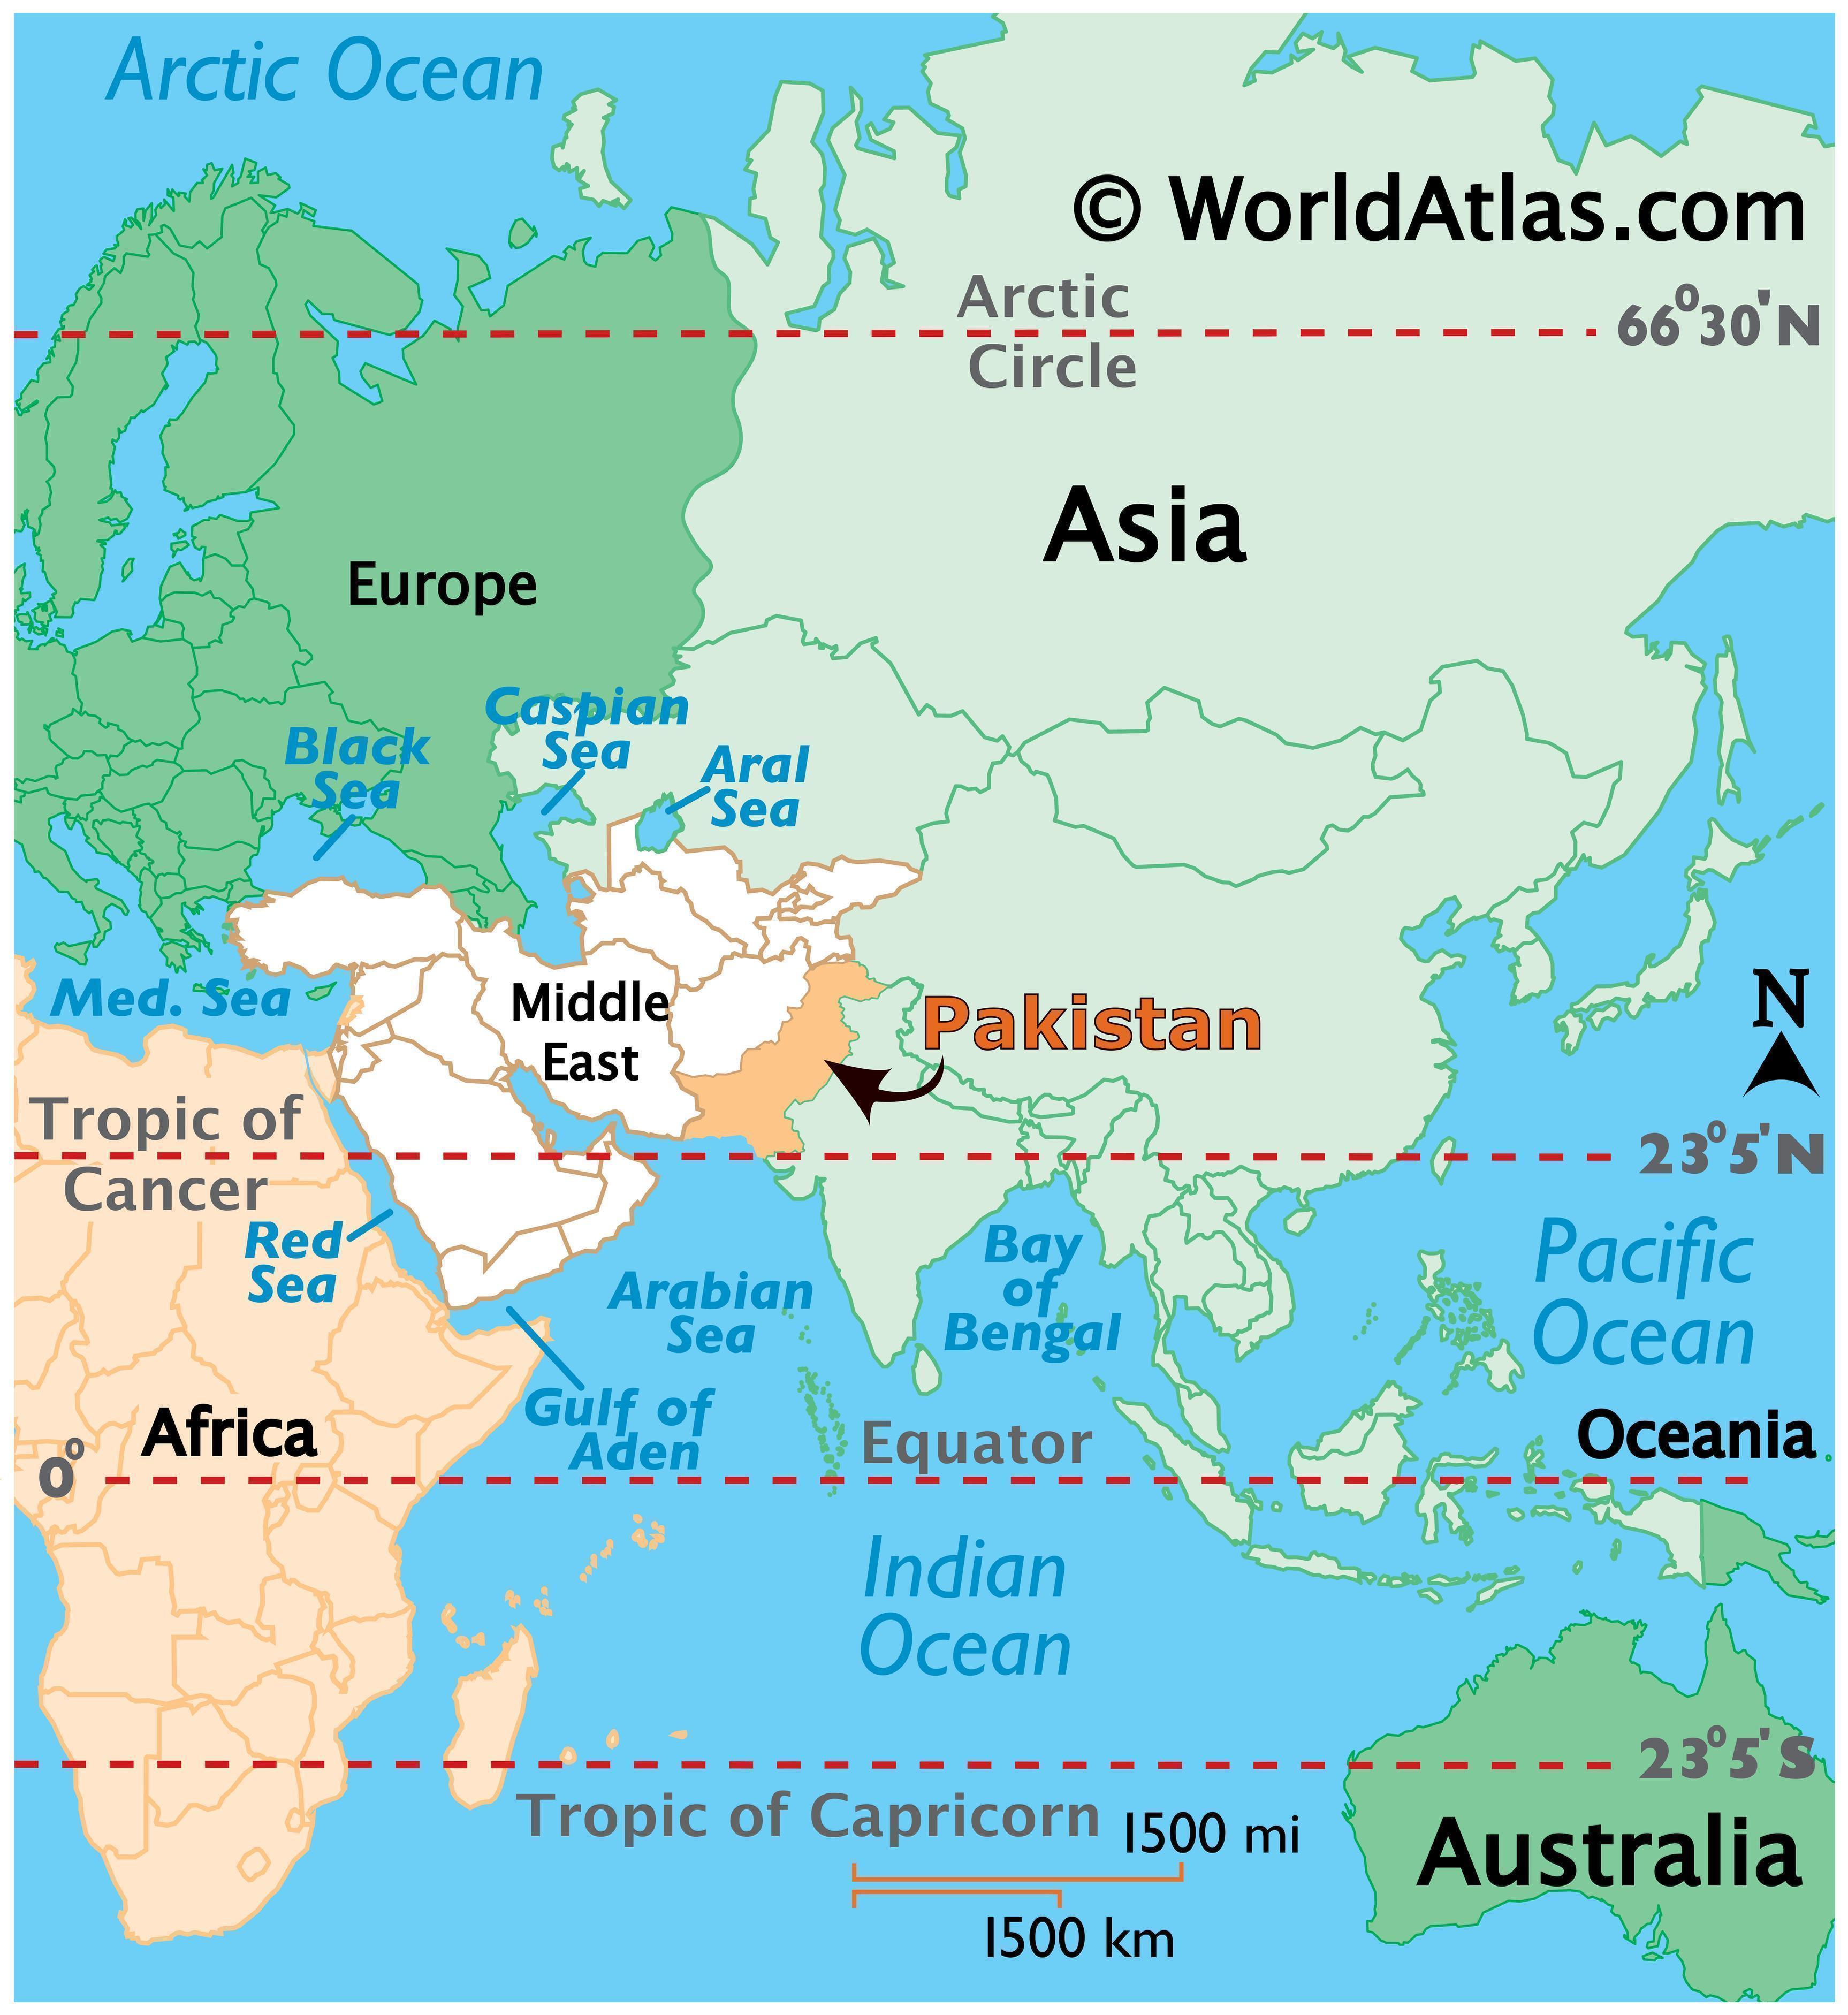 Pakistan Map Geography Of Pakistan Map Of Pakistan